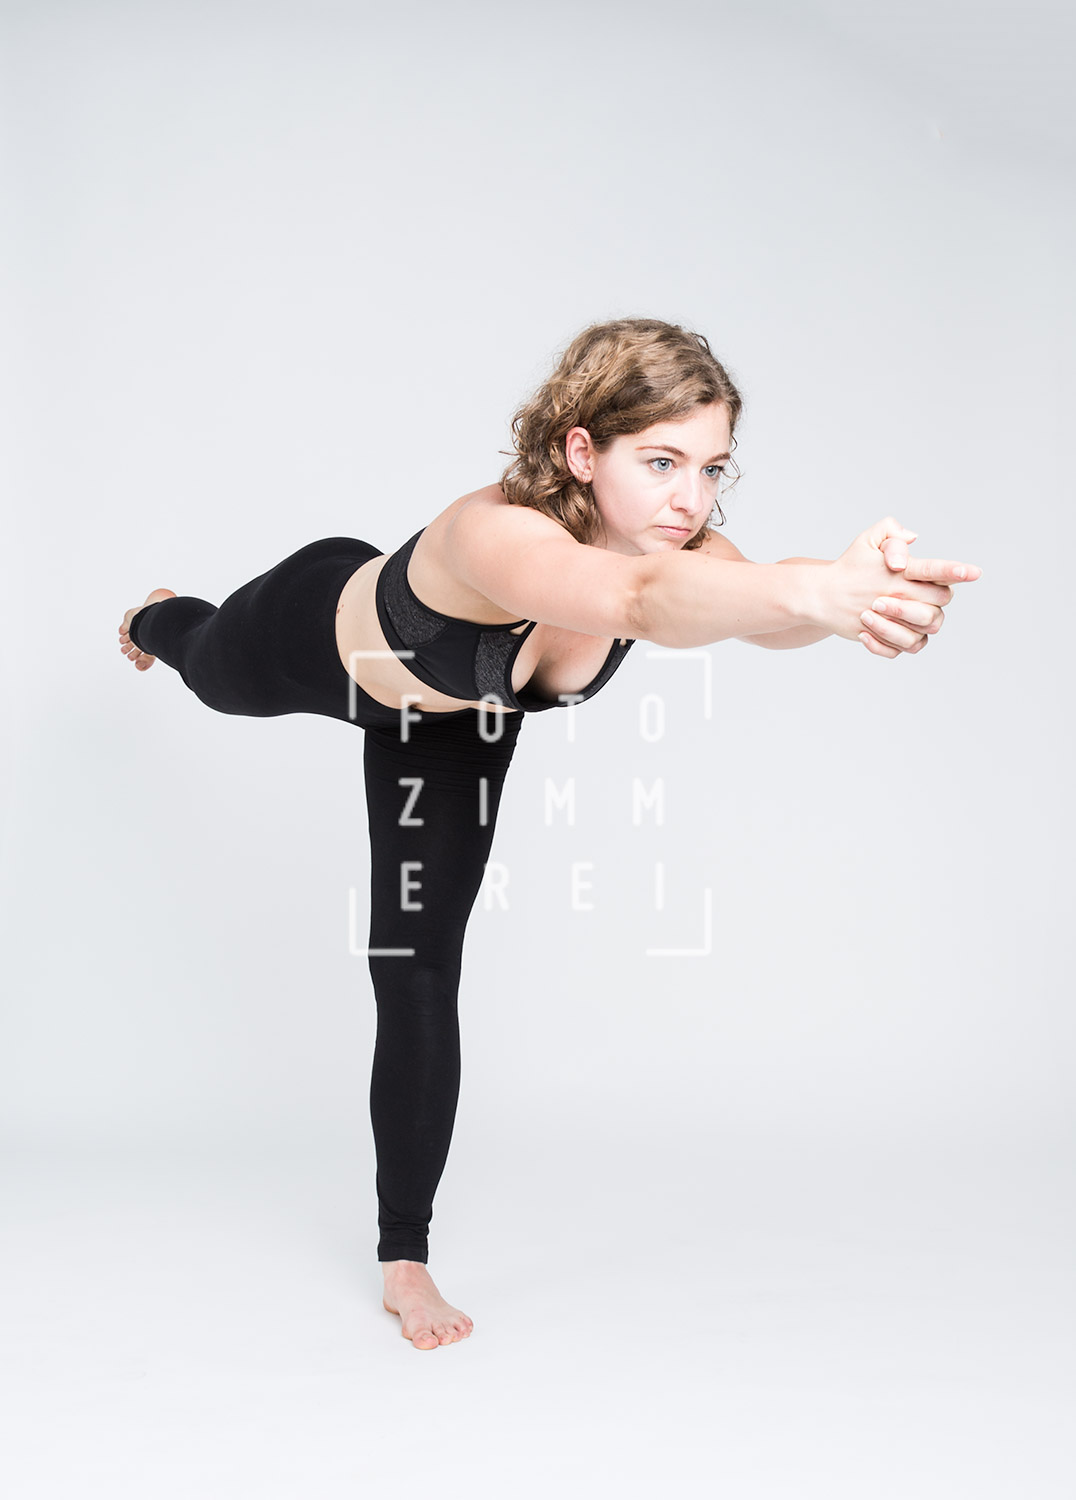 woman practicing yoga